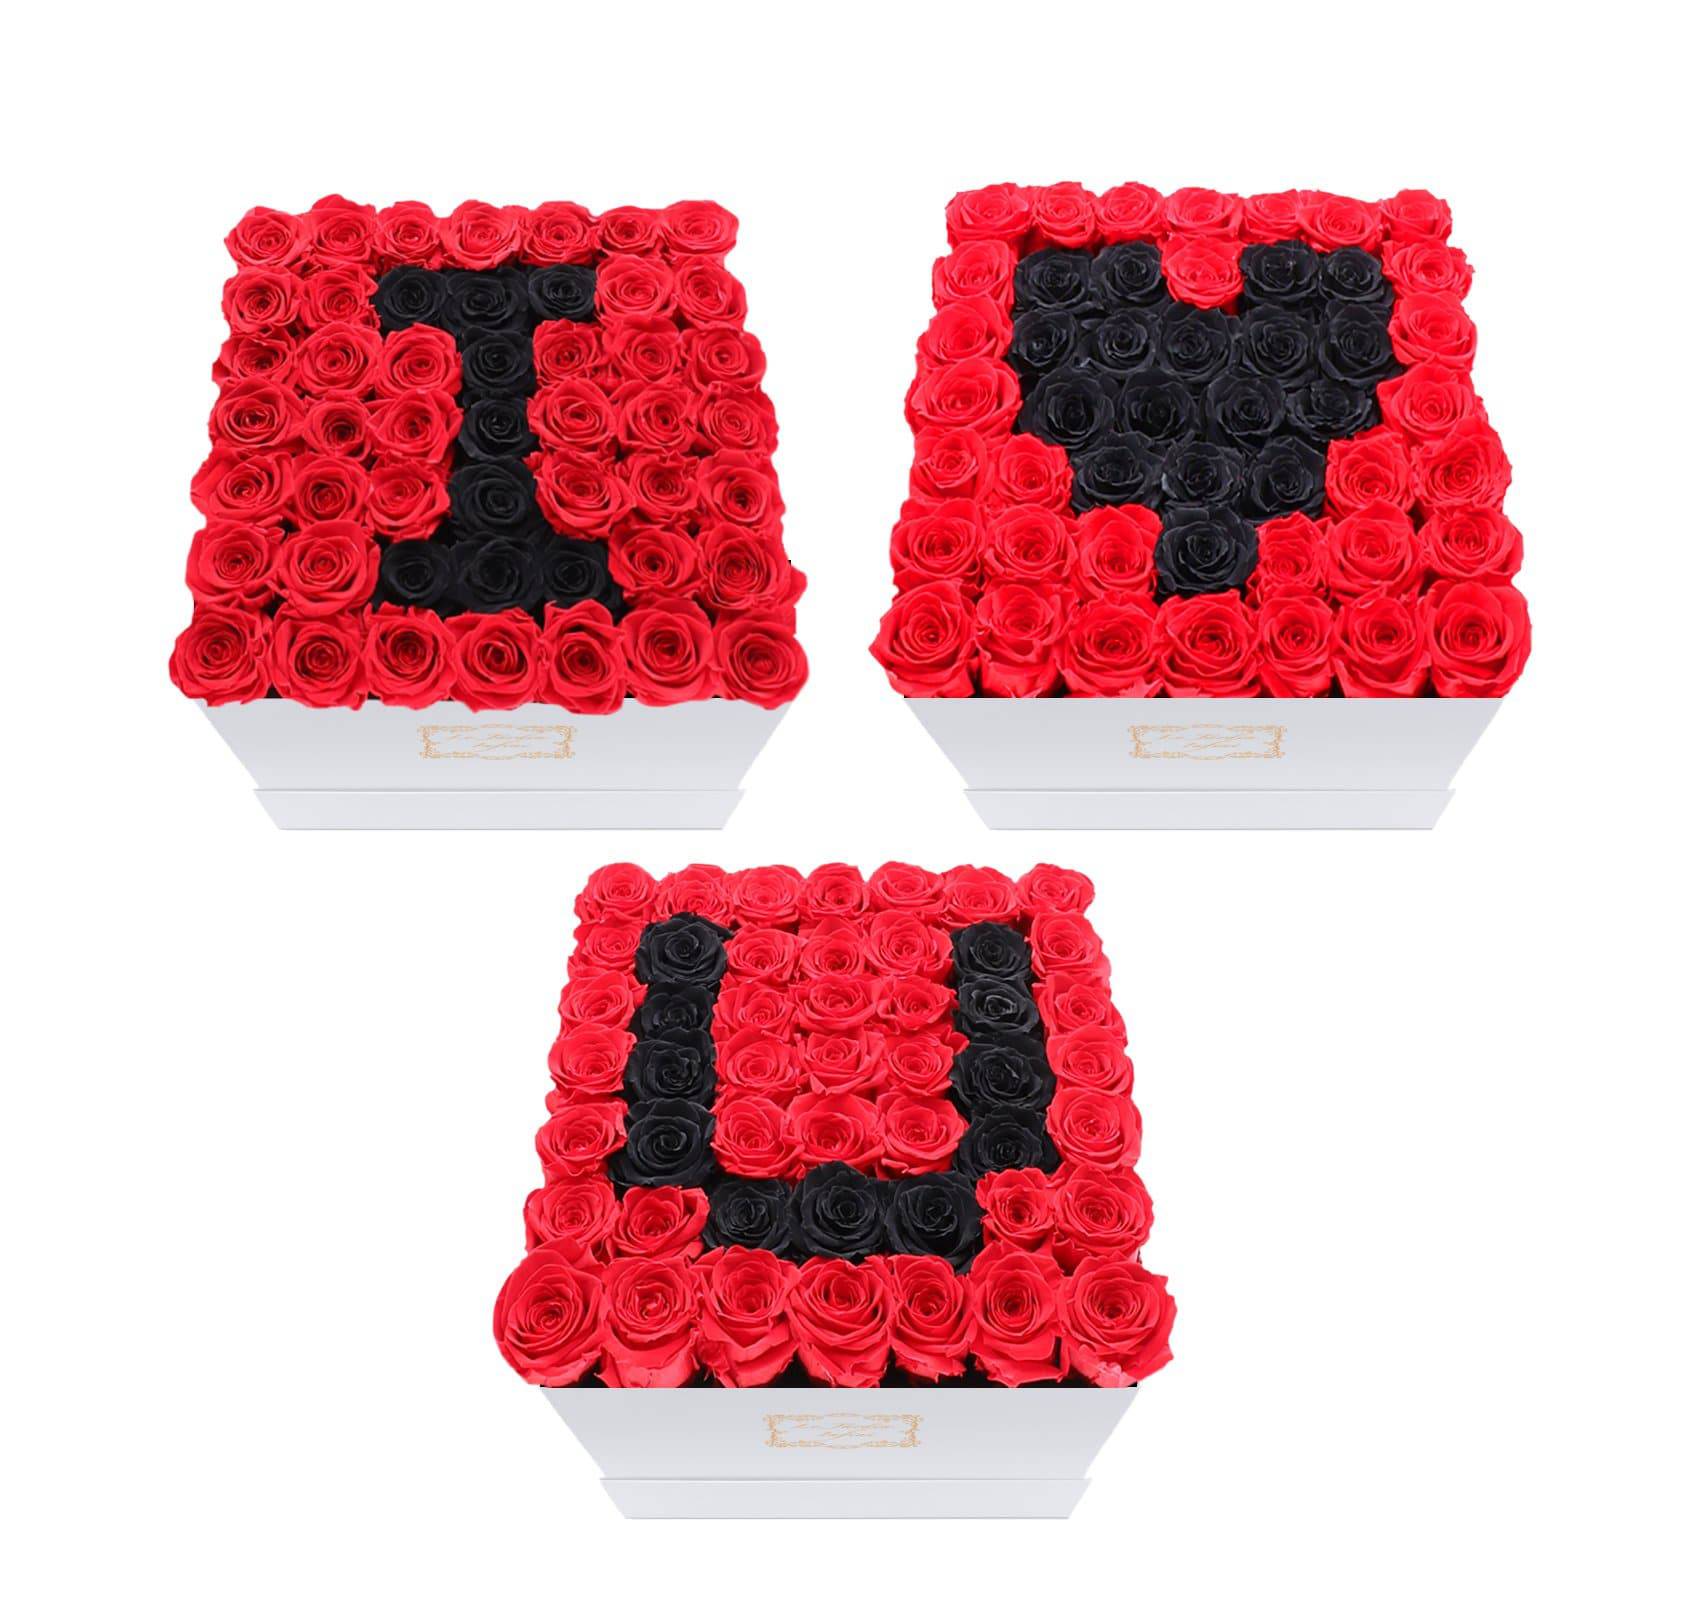 150 Roses I Love U Set Black & Red Preserved Roses - Large Square Luxury White Box